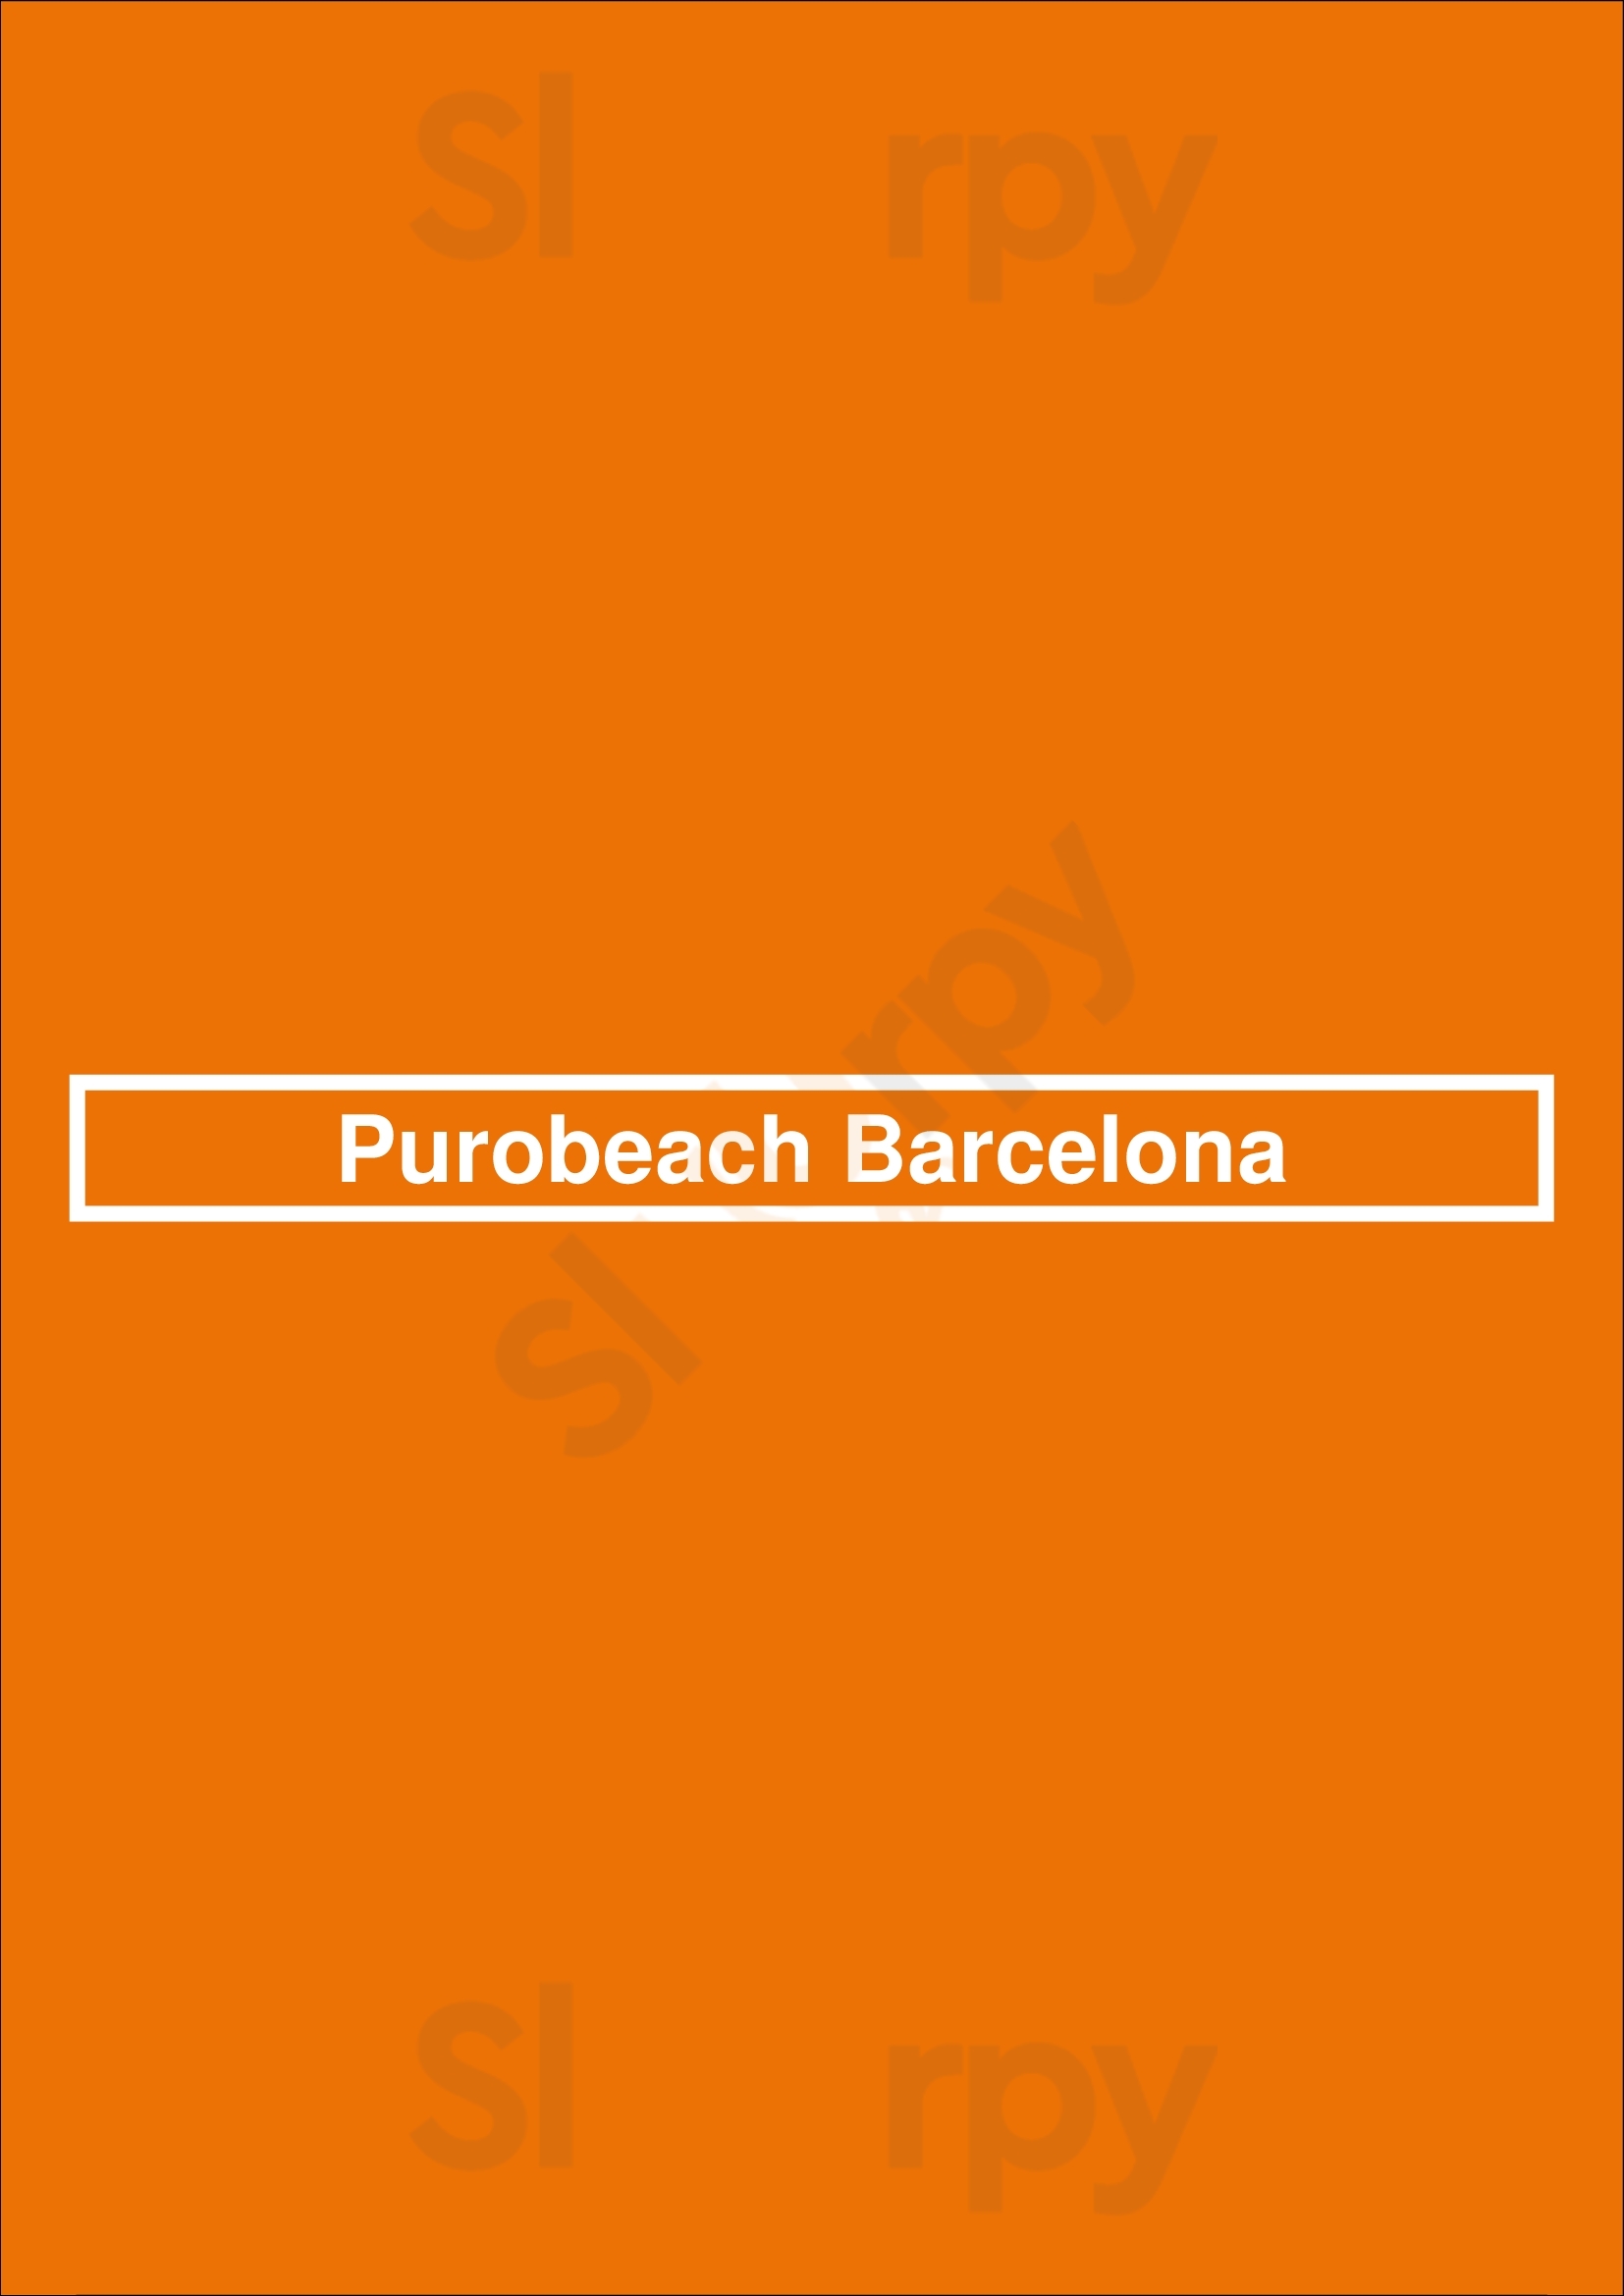 Purobeach Barcelona Barcelona Menu - 1